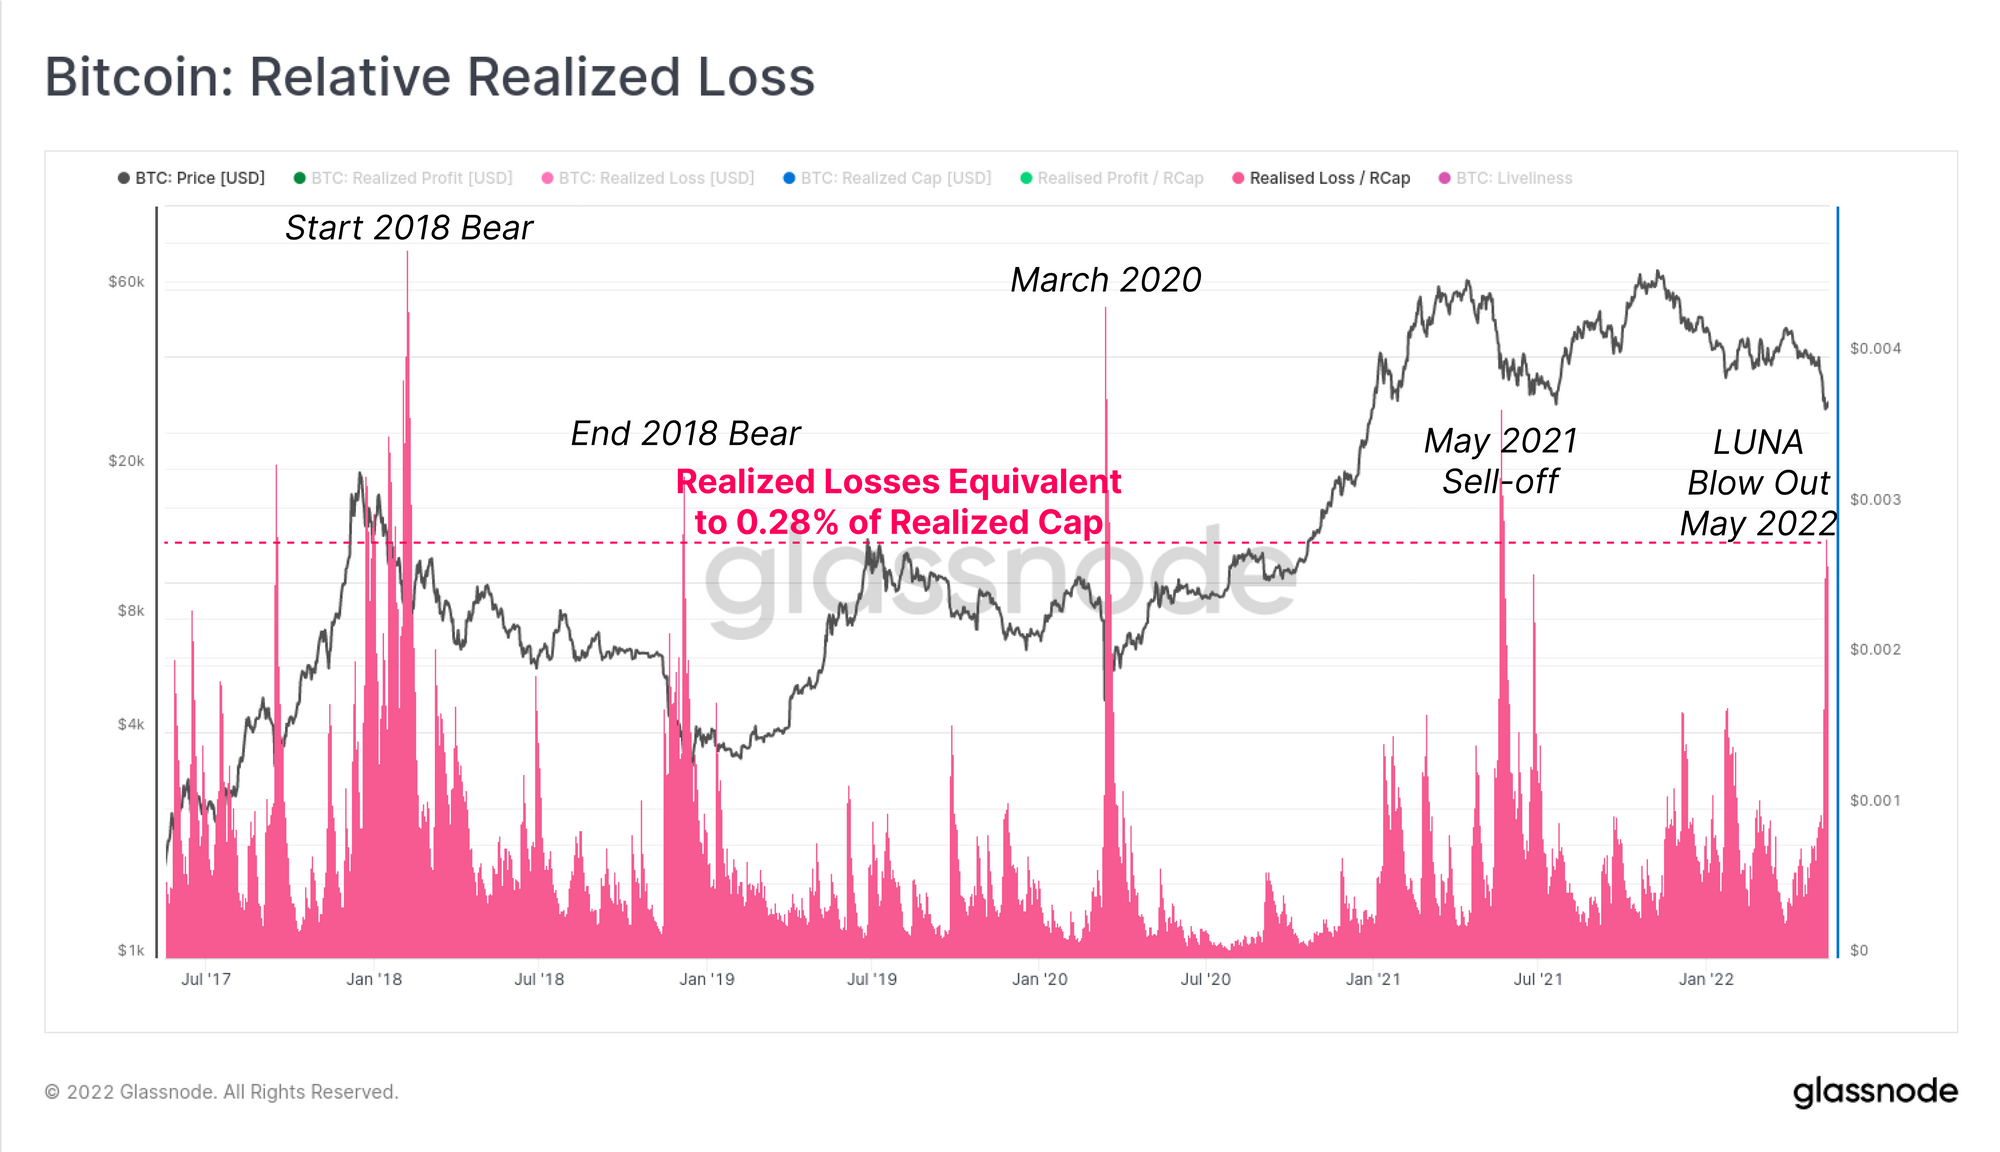 Bitcoin: Relative Realized Loss